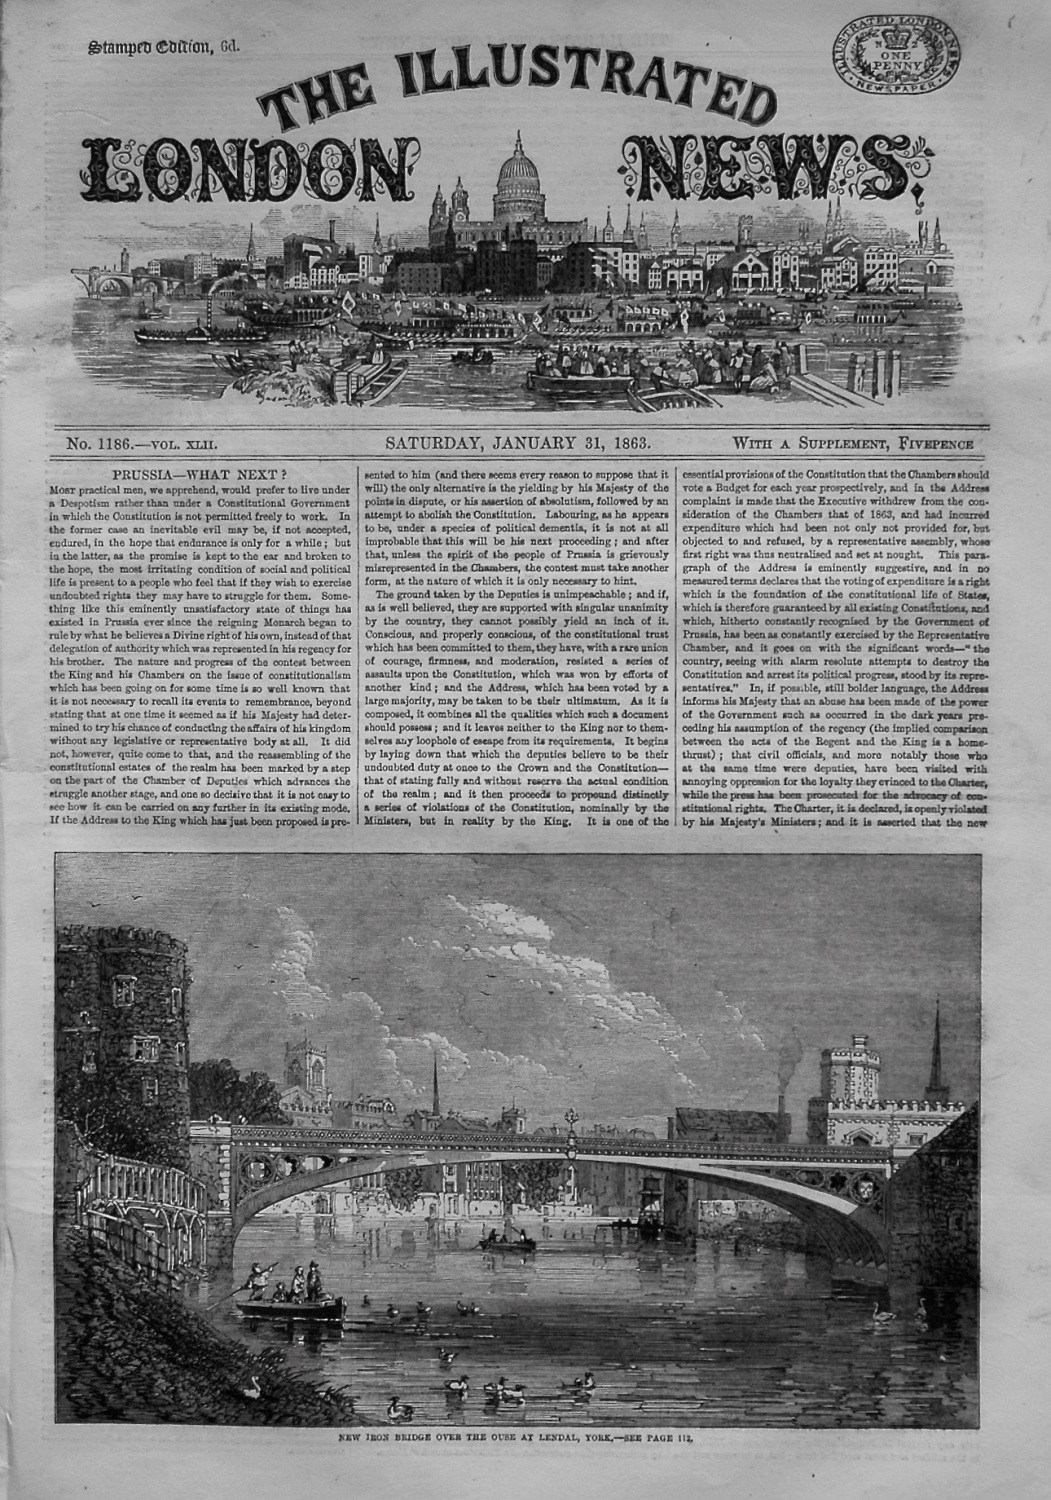 Illustrated London News. January 31st, 1863.